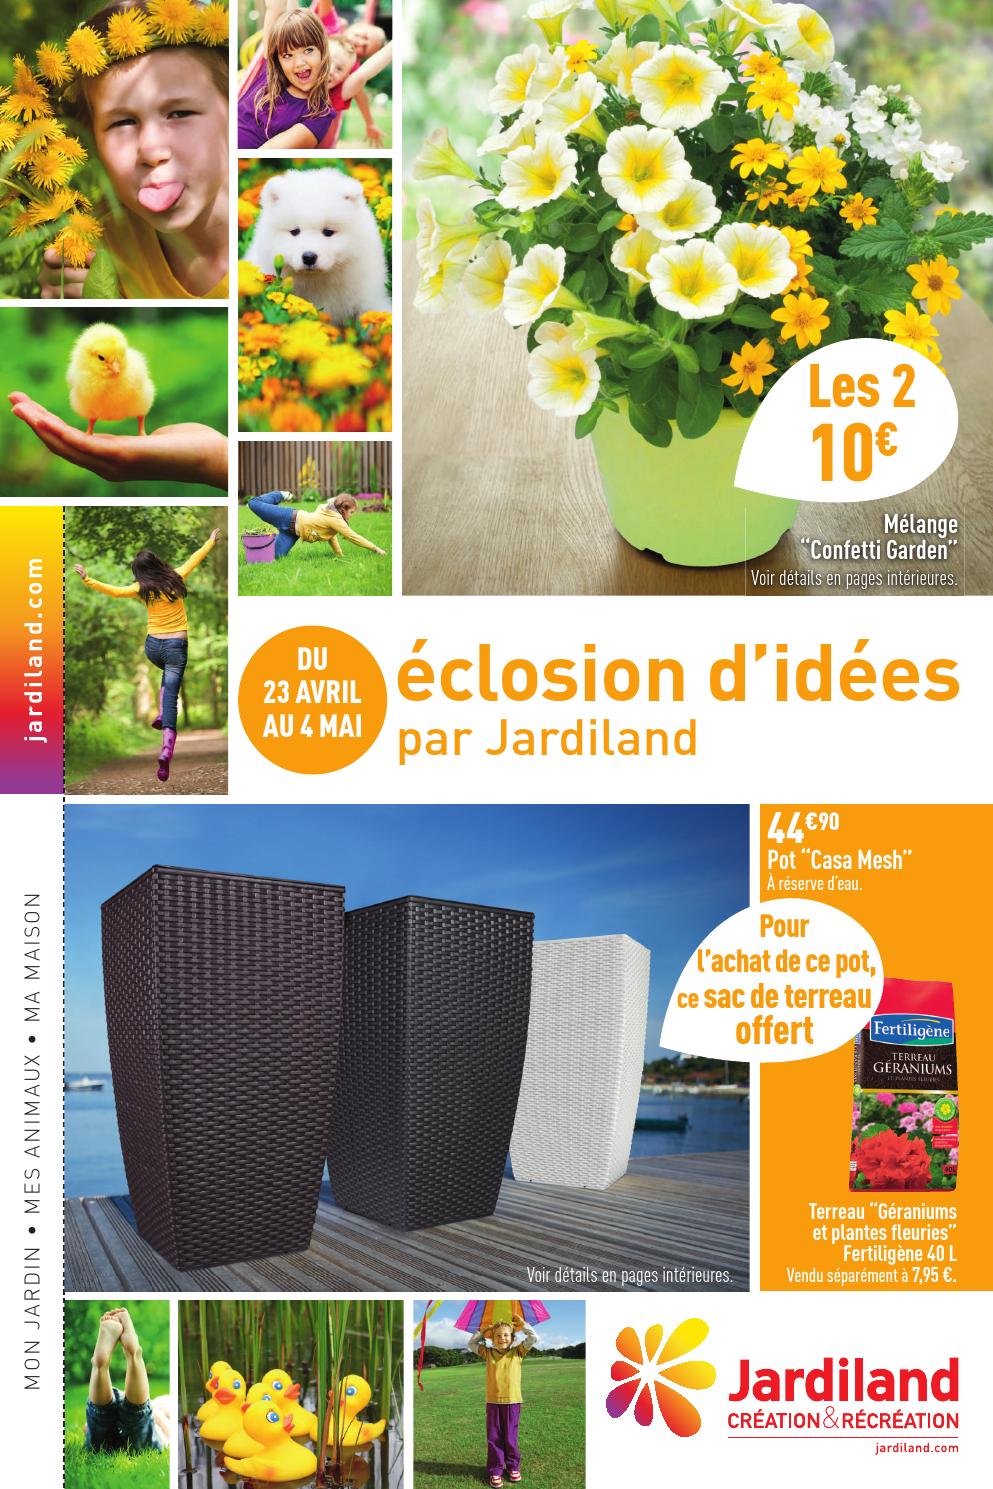 Jardiland Petite foret Génial Catalogue Jardiland 23 04 4 05 2014 by Joe Monroe issuu